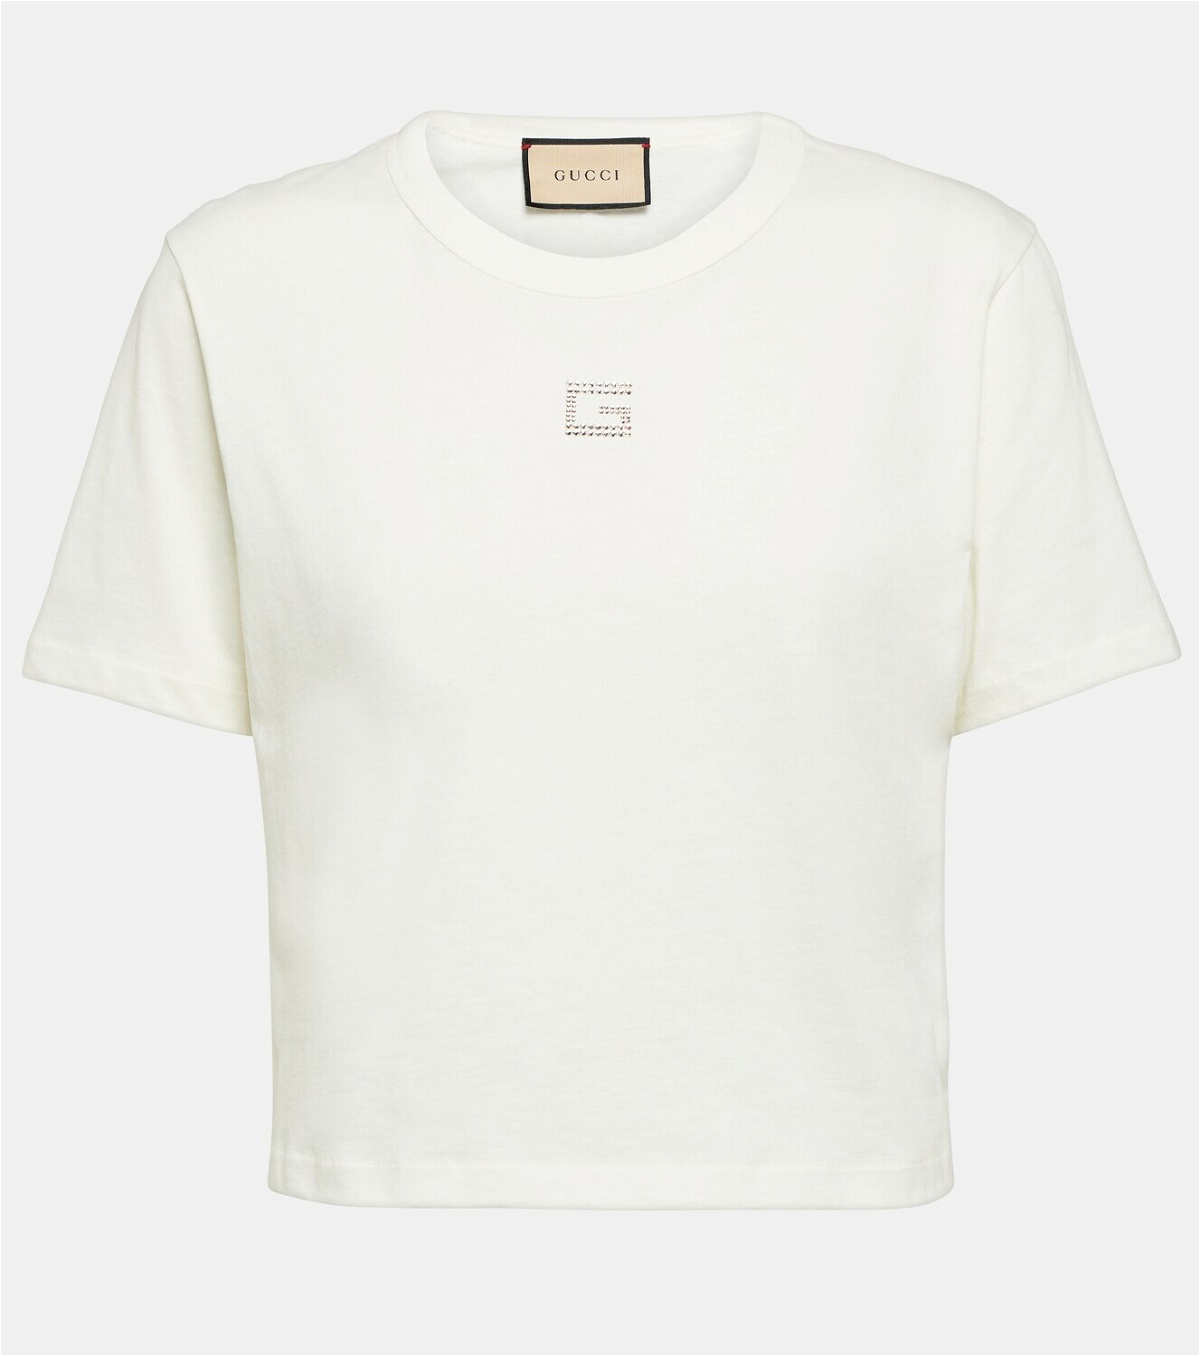 Gucci Original Gucci bear-patch Oversize T-shirt - Farfetch